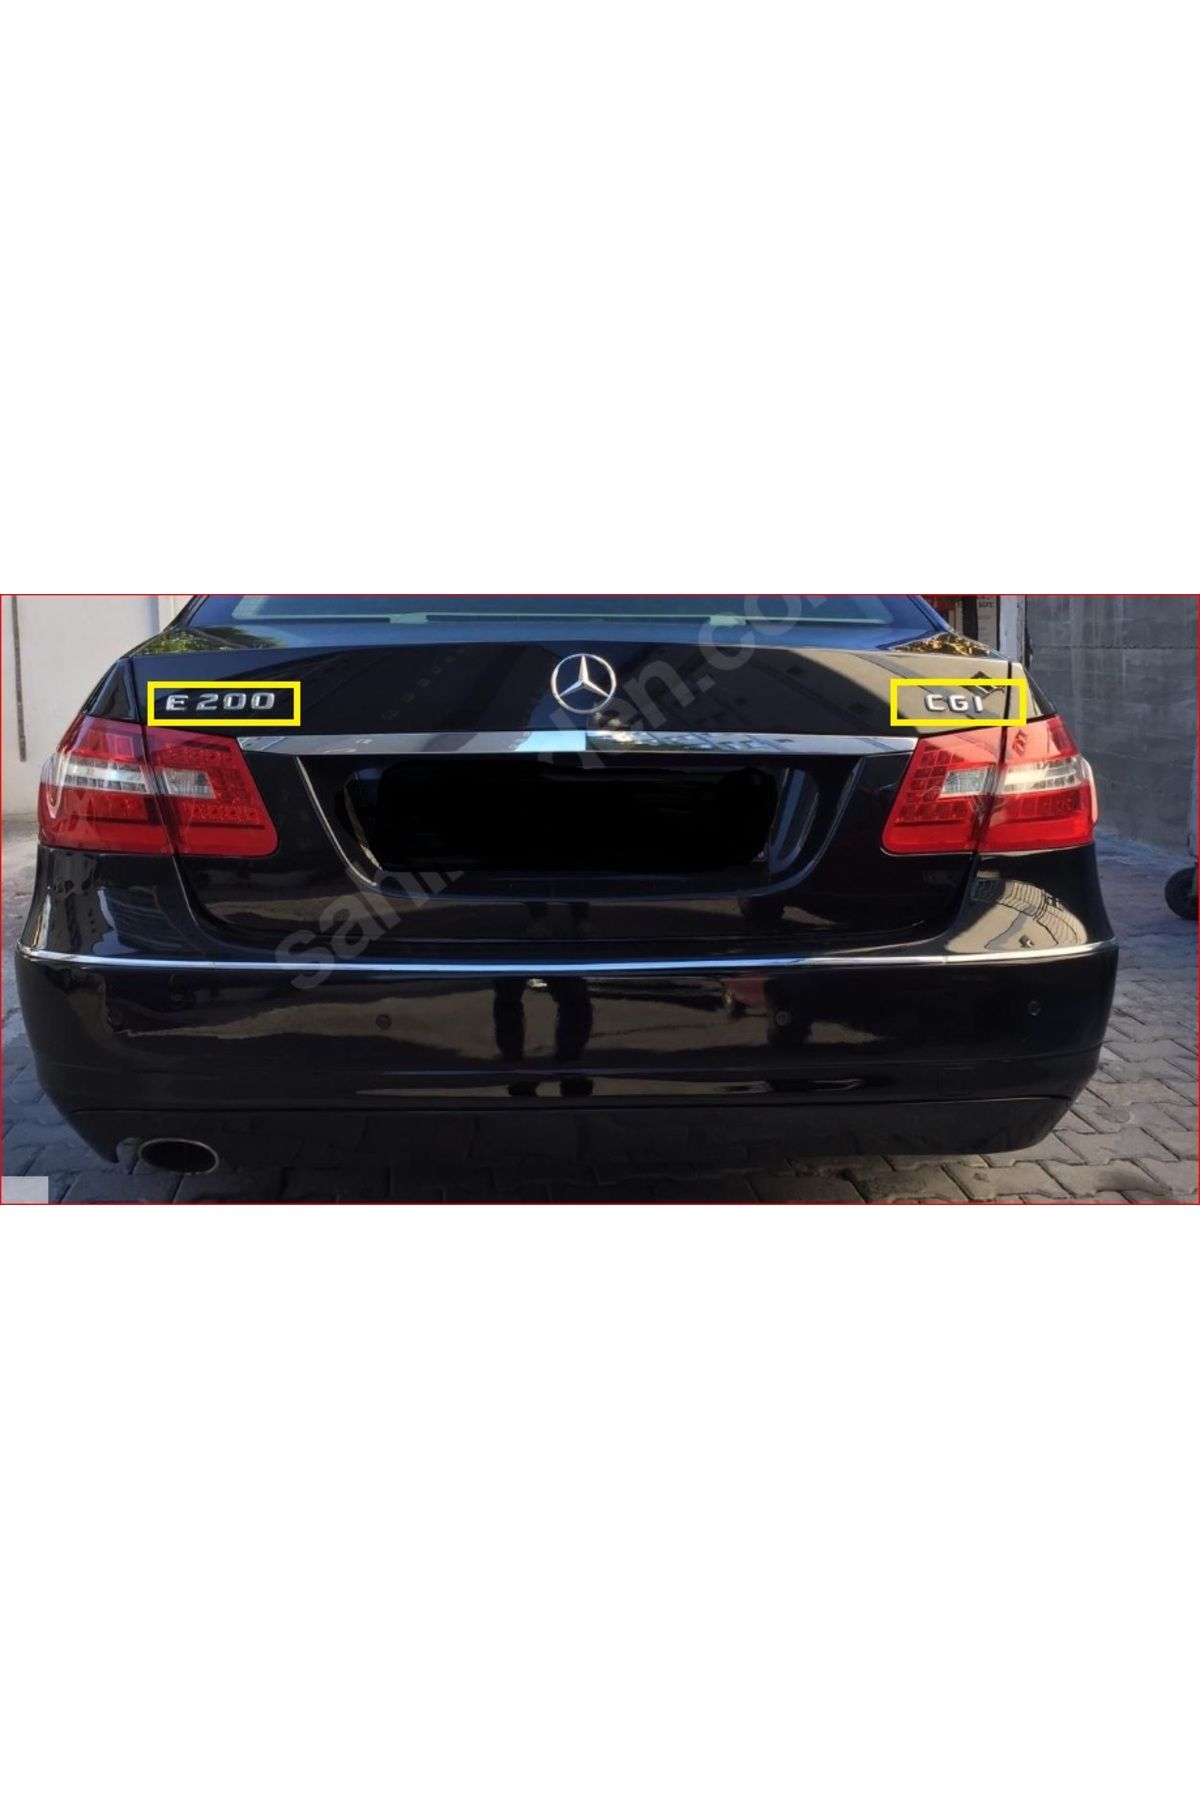 EDEXPORT Mercedes W204 Kasa E200 ve CGI Krom Bagaj Yazısı 2'li Paket